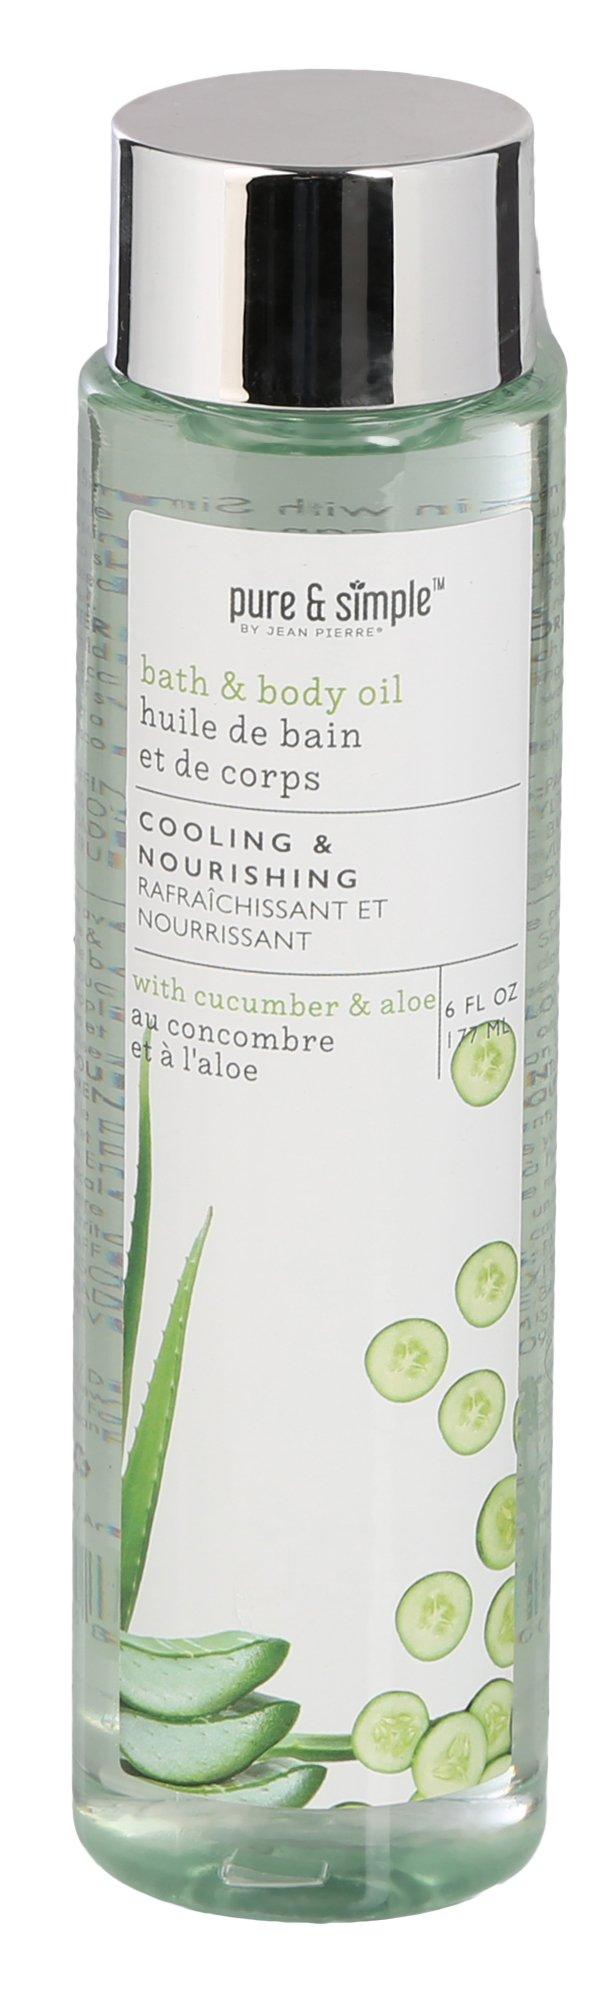 6 oz Cucumber & Aloe Bath & Body Oil